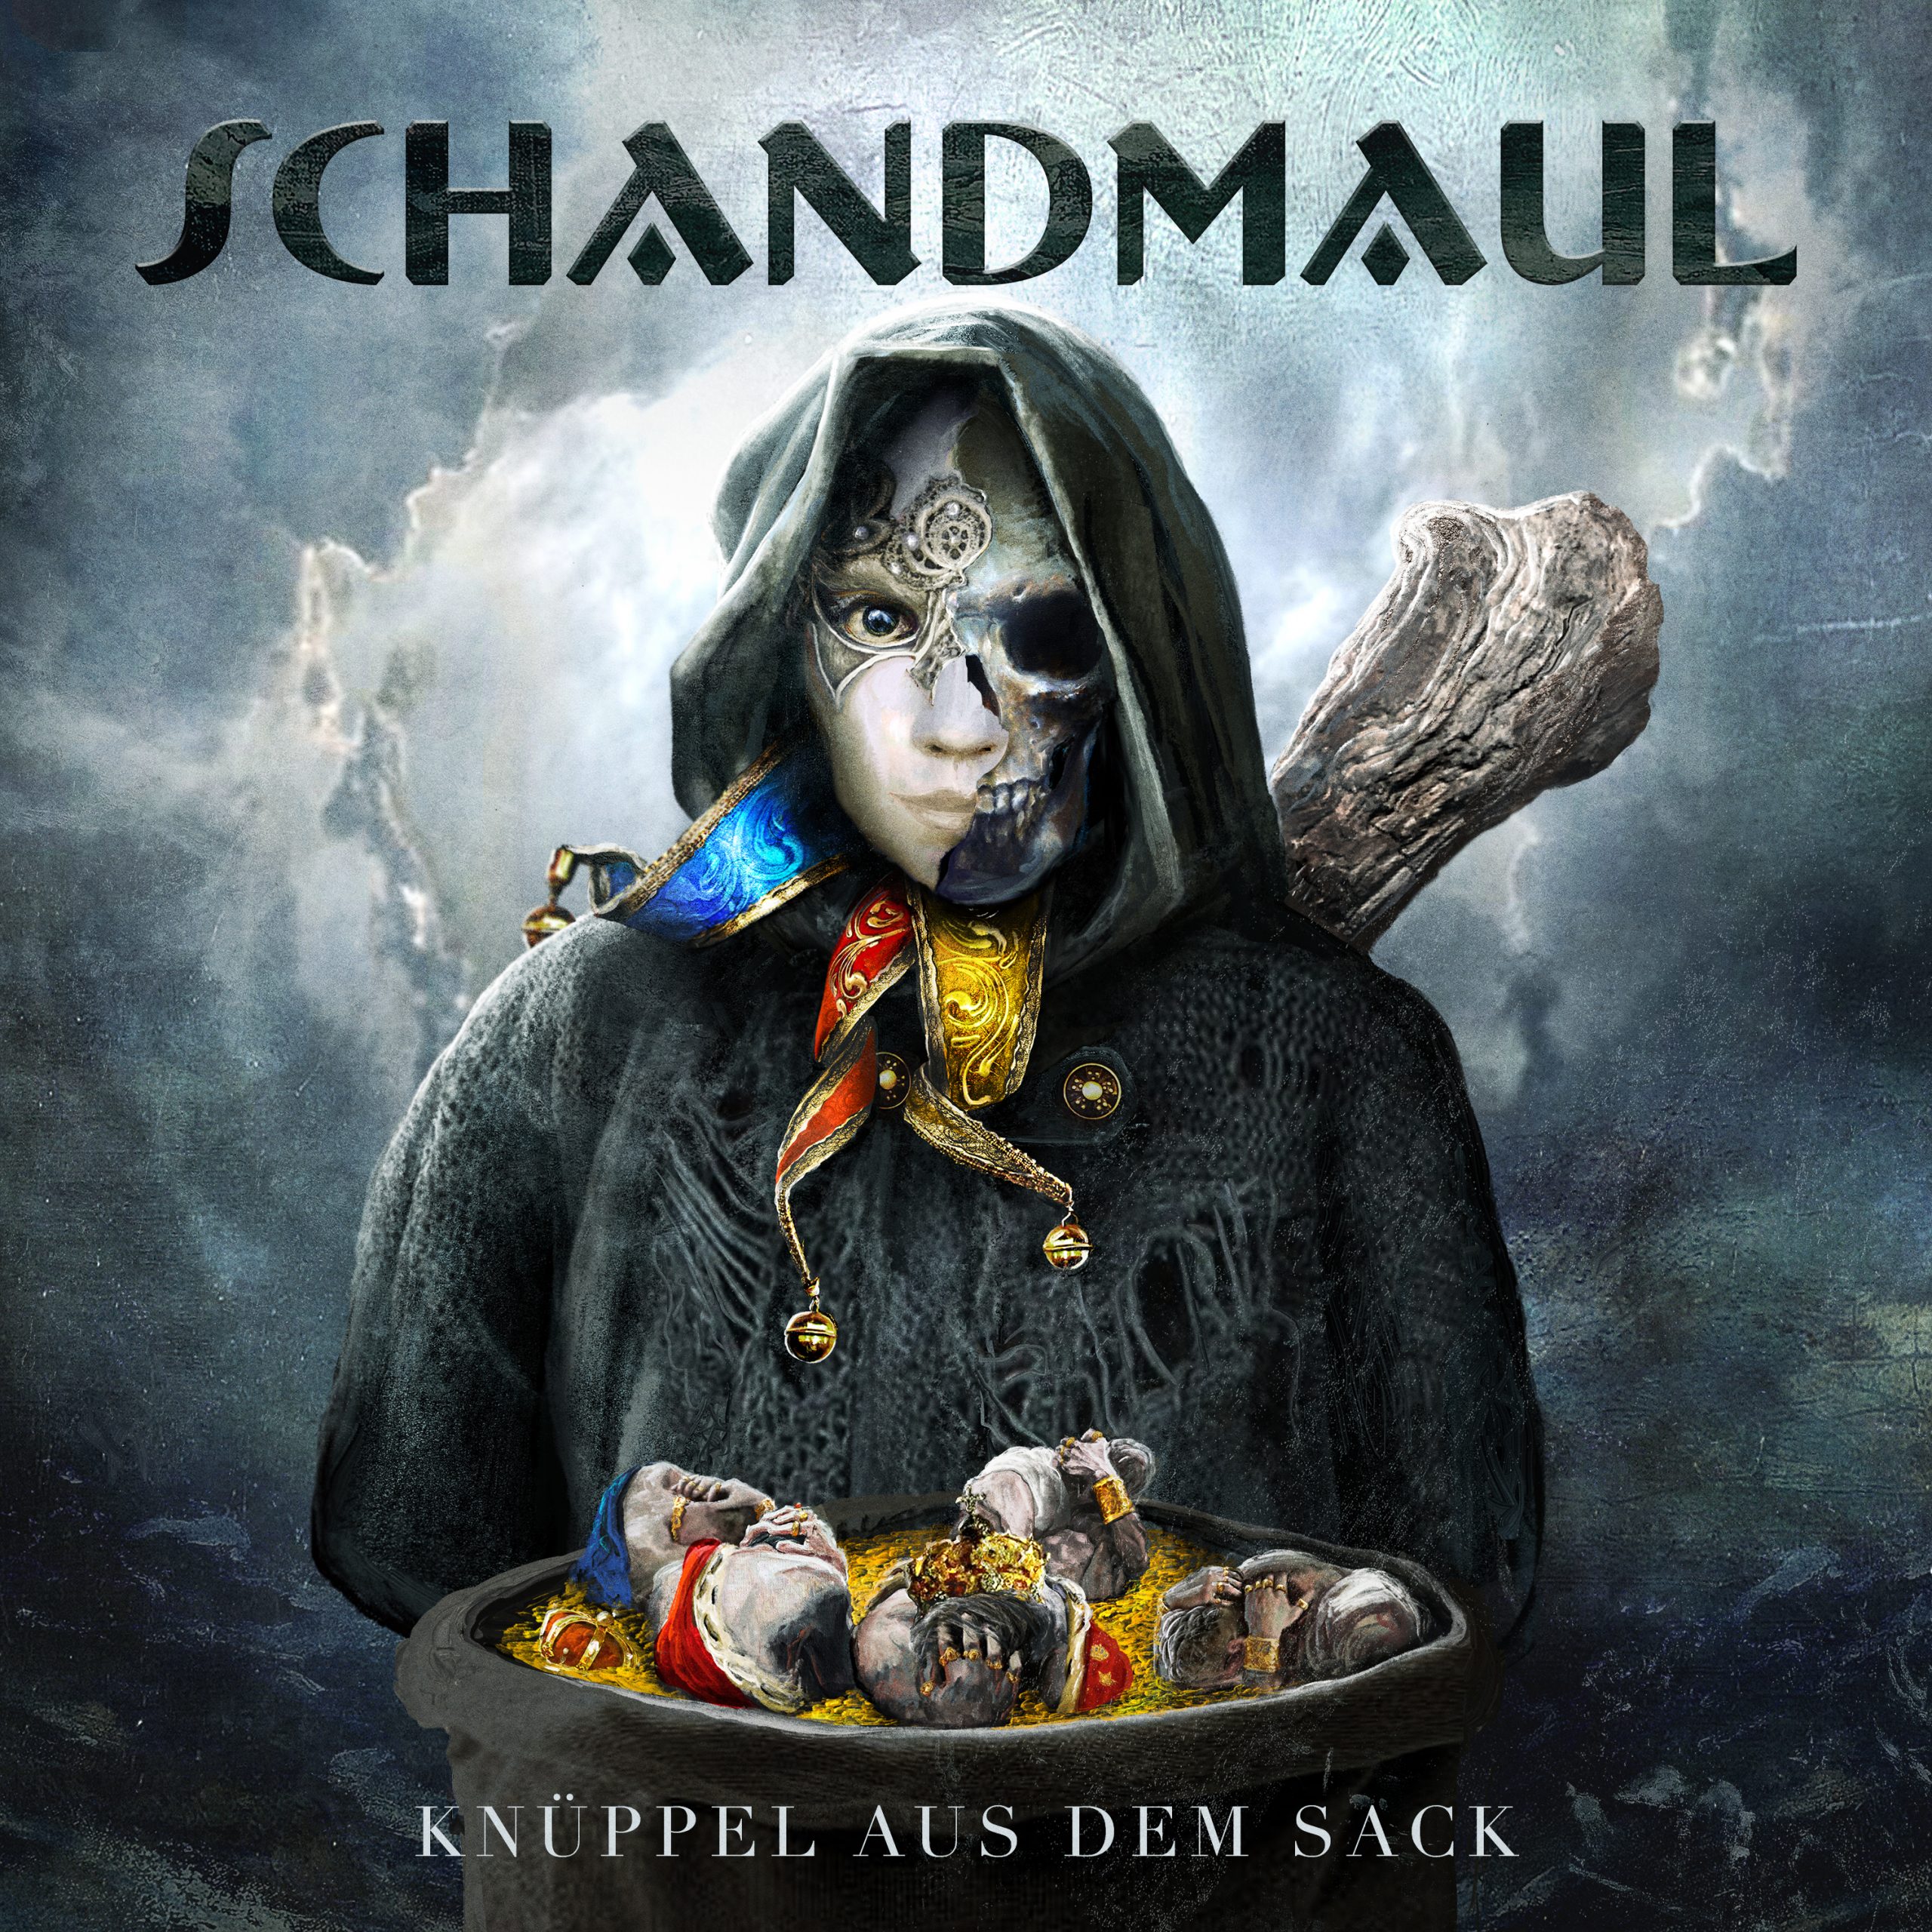 schandmaul-knueppel-aus-dem-sack-ein-album-review